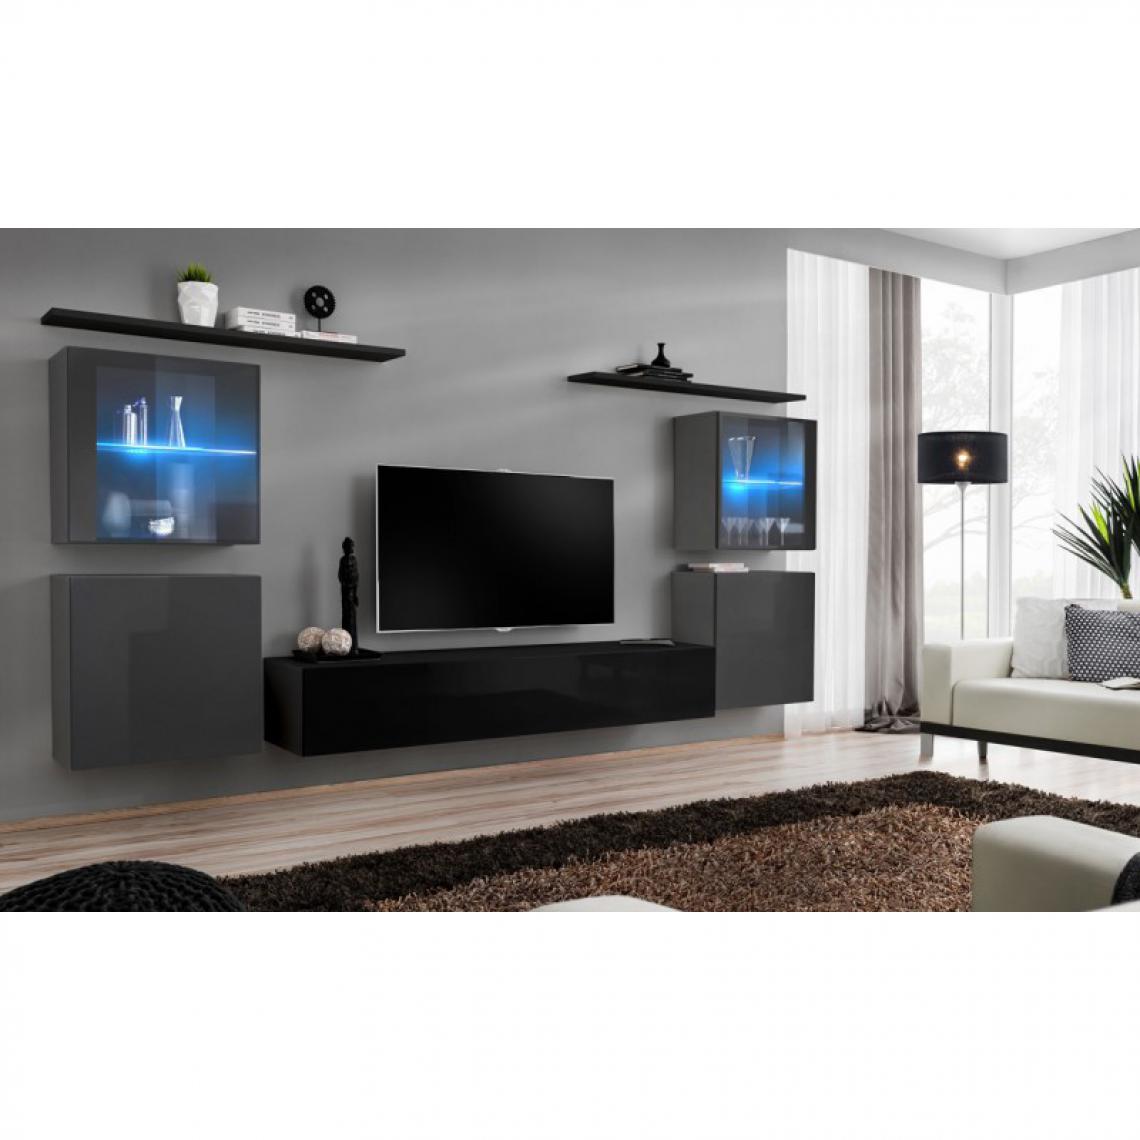 Ac-Deco - Meuble TV Mural Design Switch XIV 320cm Gris & Noir - Meubles TV, Hi-Fi